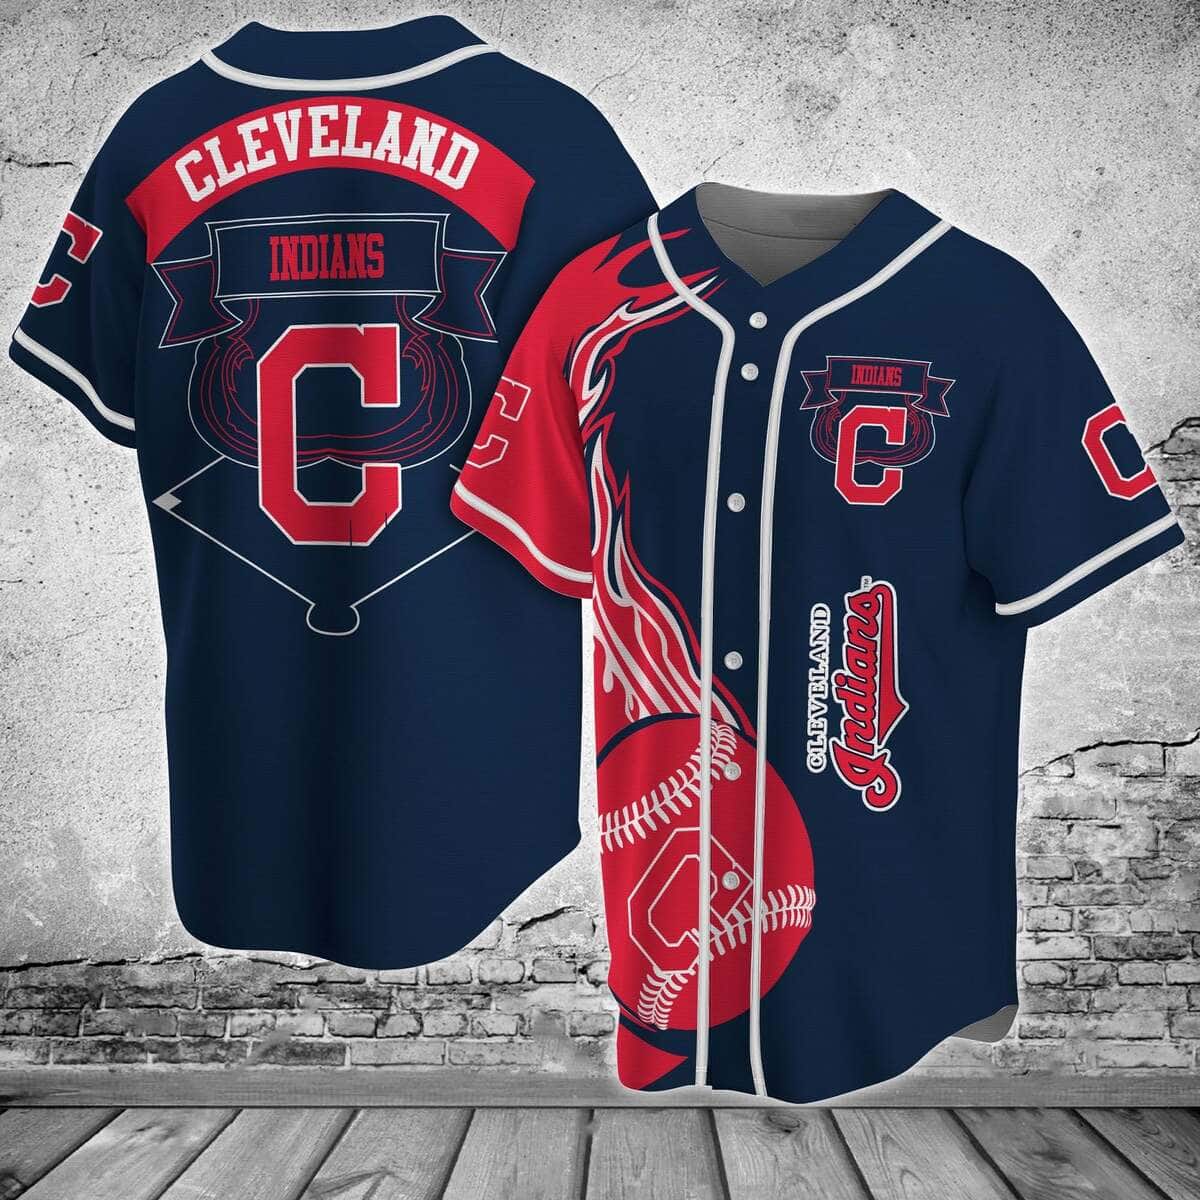 Customize MLB Cleveland Indians Baseball Jersey Gift For Boyfriend